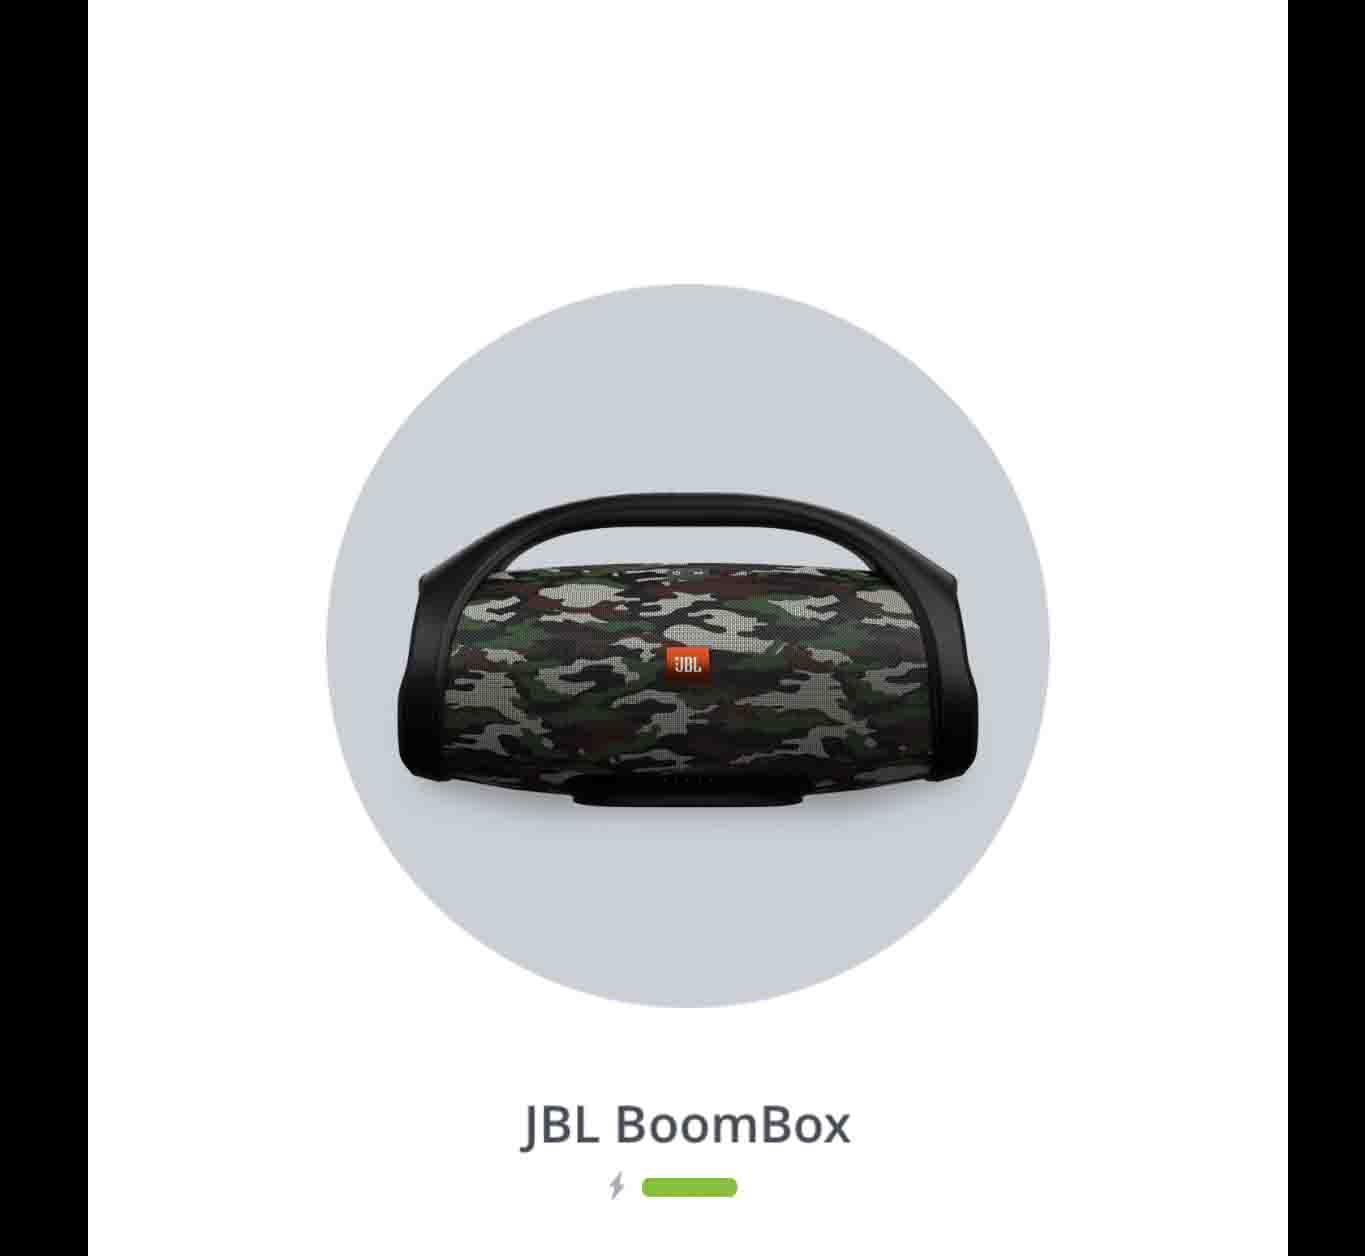 Monument utilgivelig Missionær JBL Boombox Firmware Update Instructions - Tom's Tek Stop